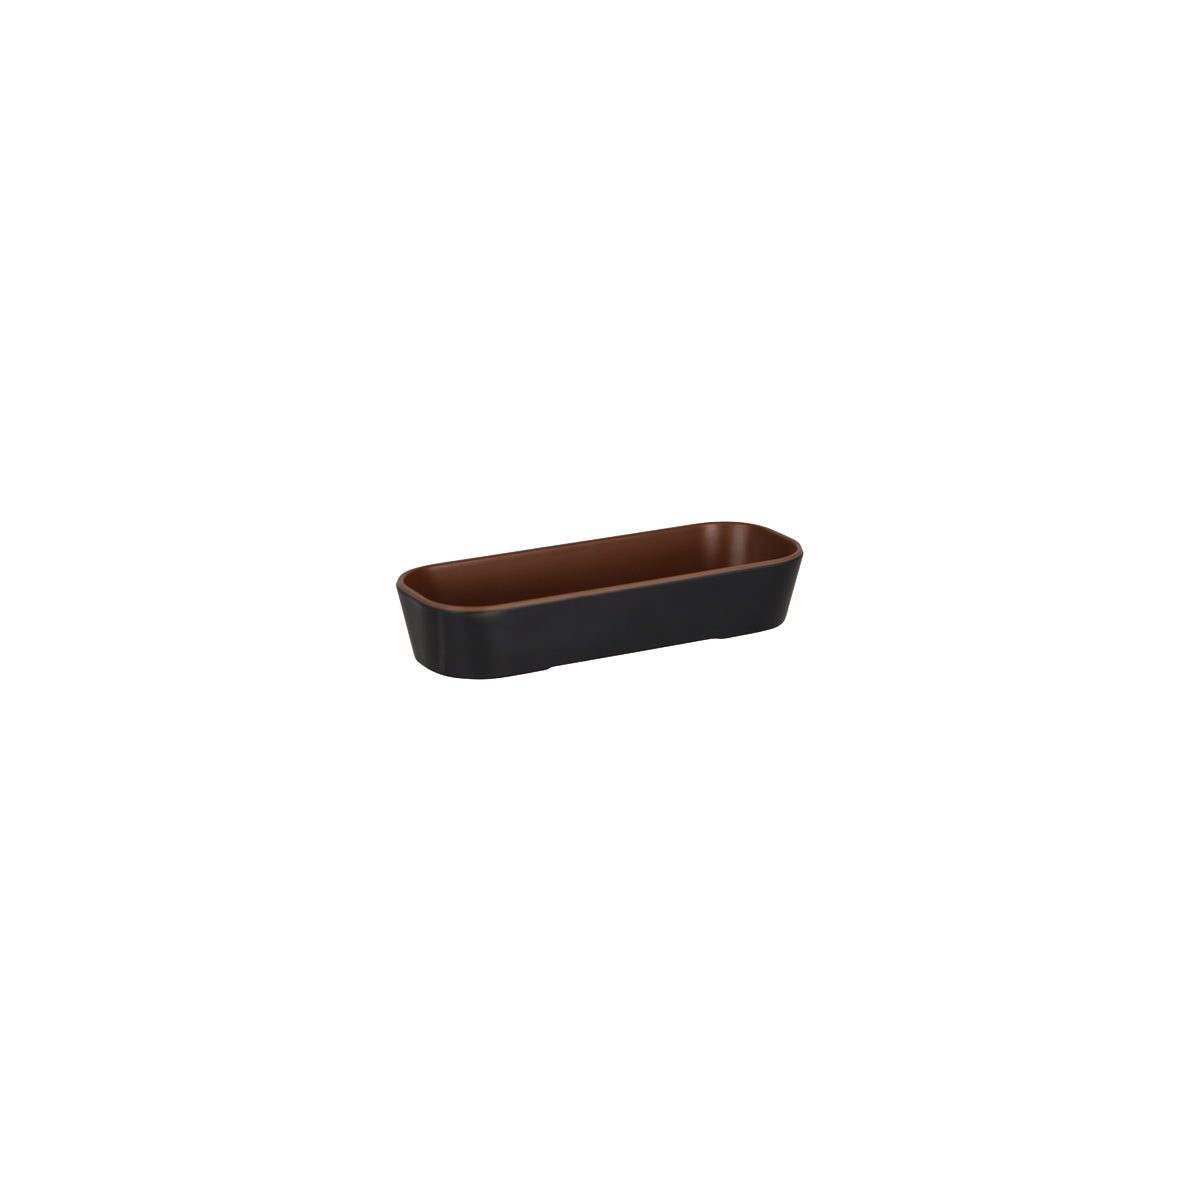 46396 Zicco Bento Box Walnut / Black Inroom Rectangle Insert Tomkin Australia Hospitality Supplies